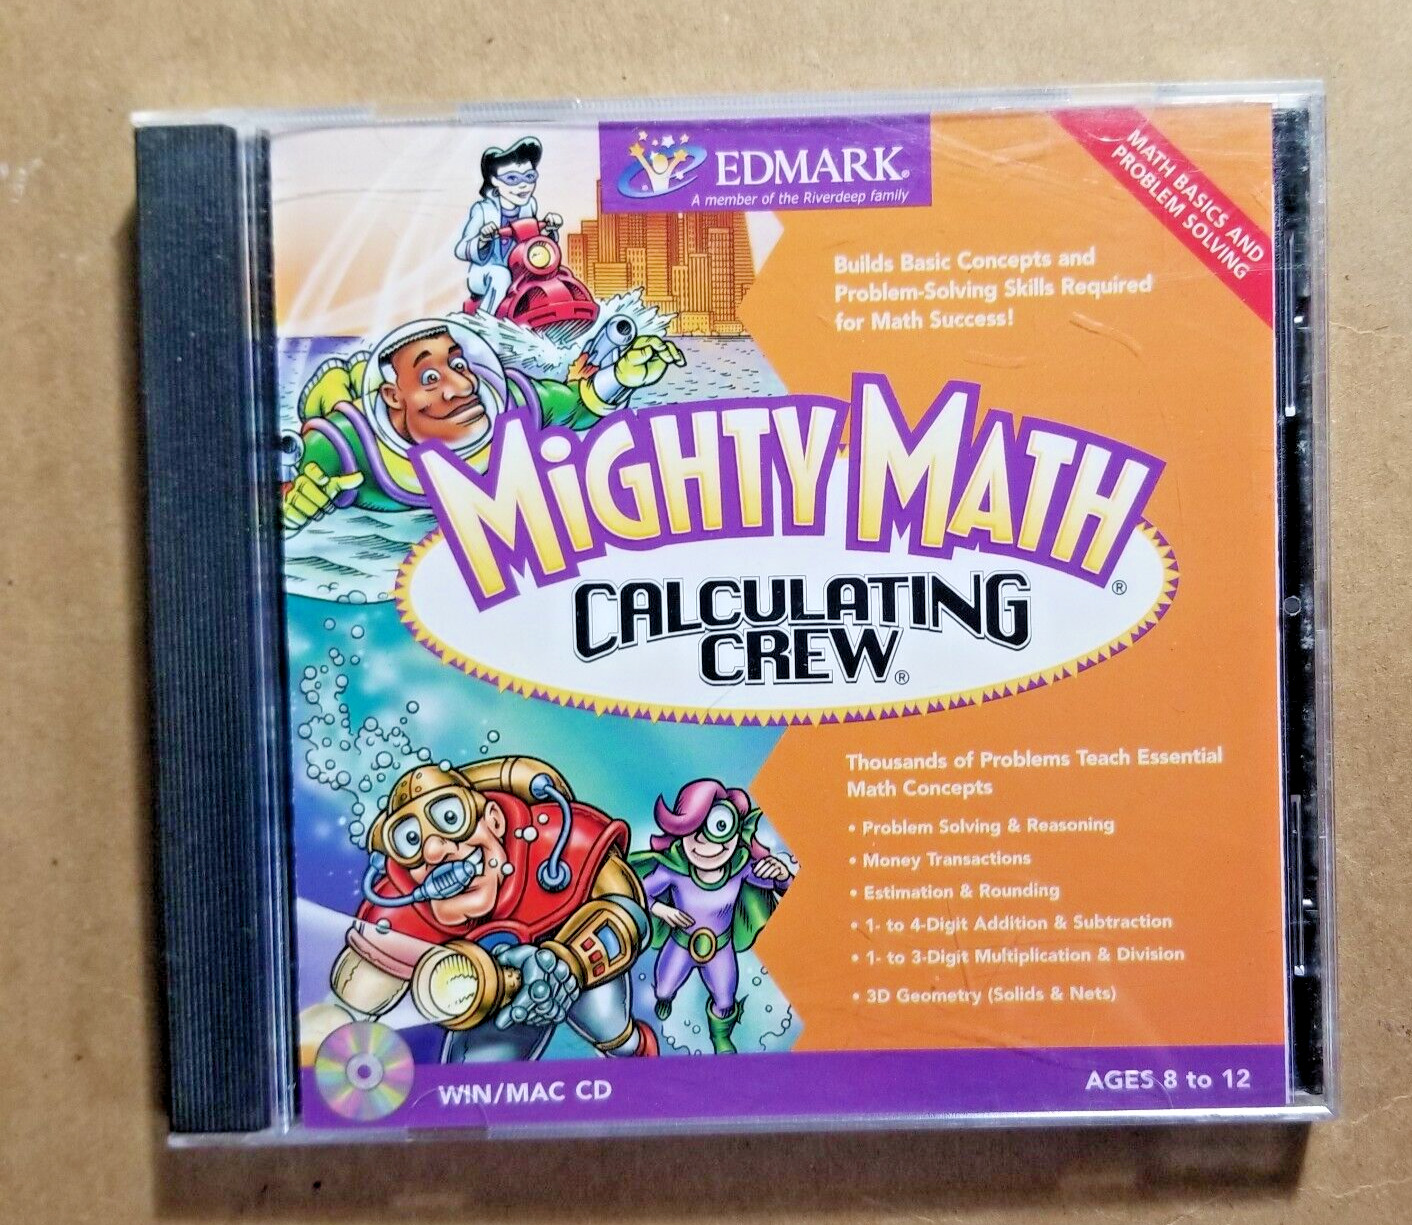 Mighty Math Calculating Crew CD-ROM WIN/MAC CD Math Basics & Problem Solving